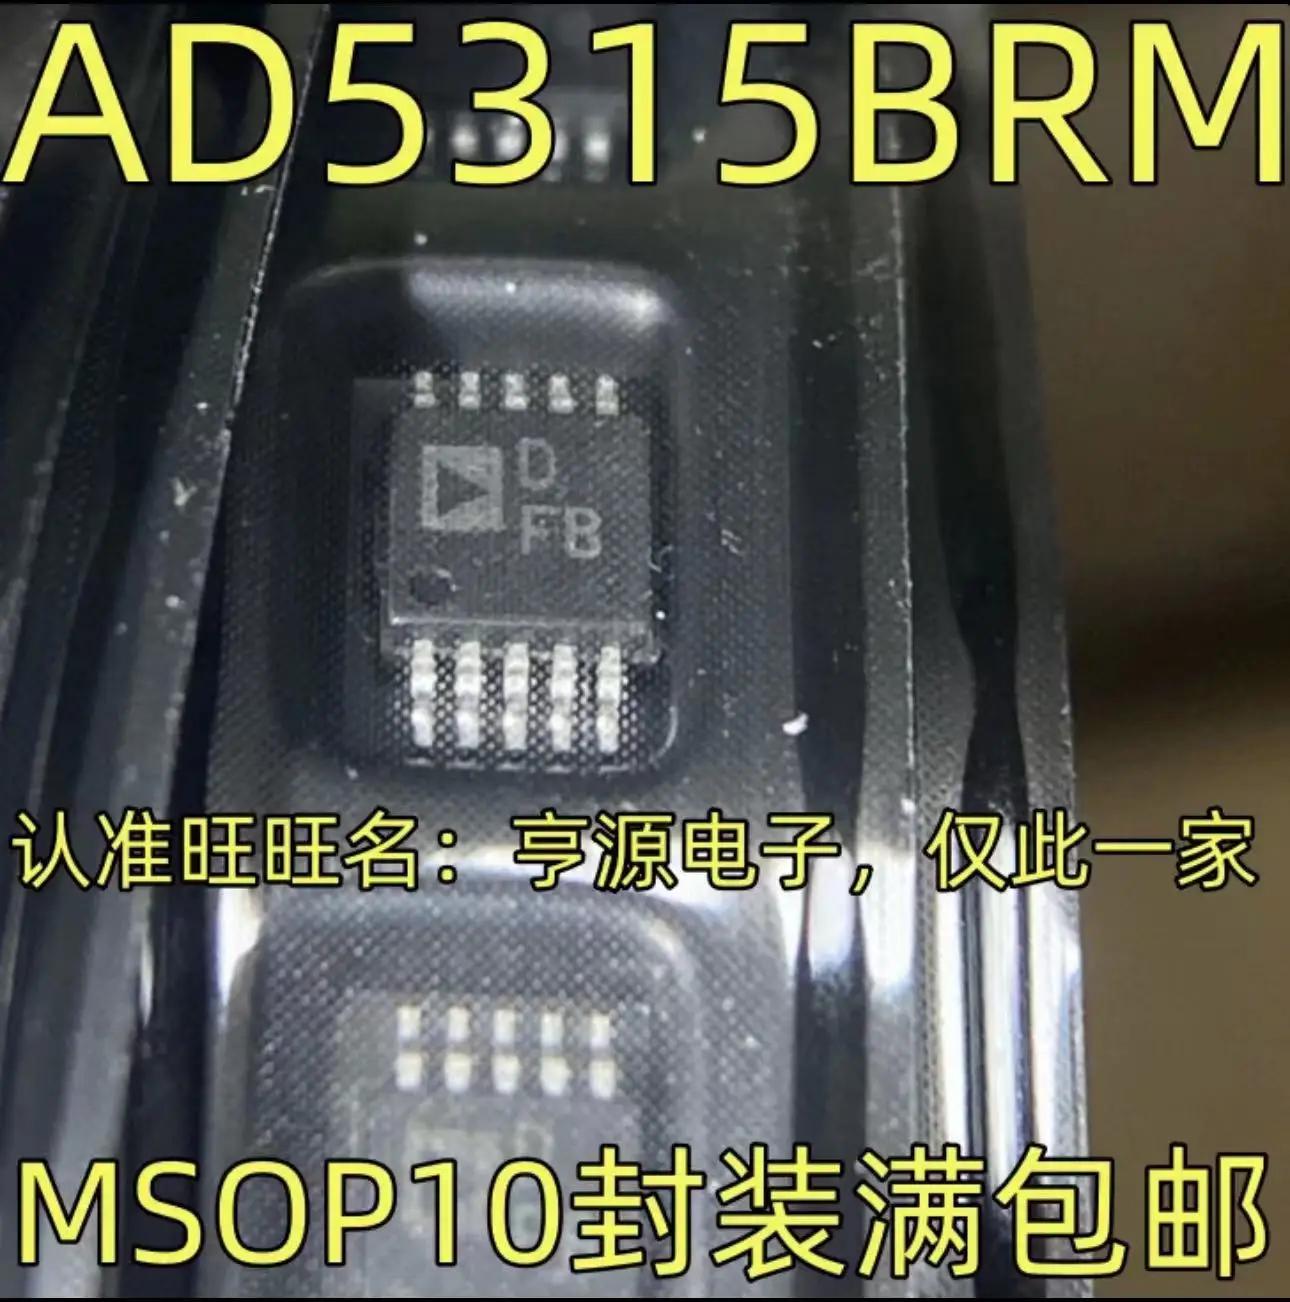 AD5315BRM DFB MSOP-10, 1-10PCs